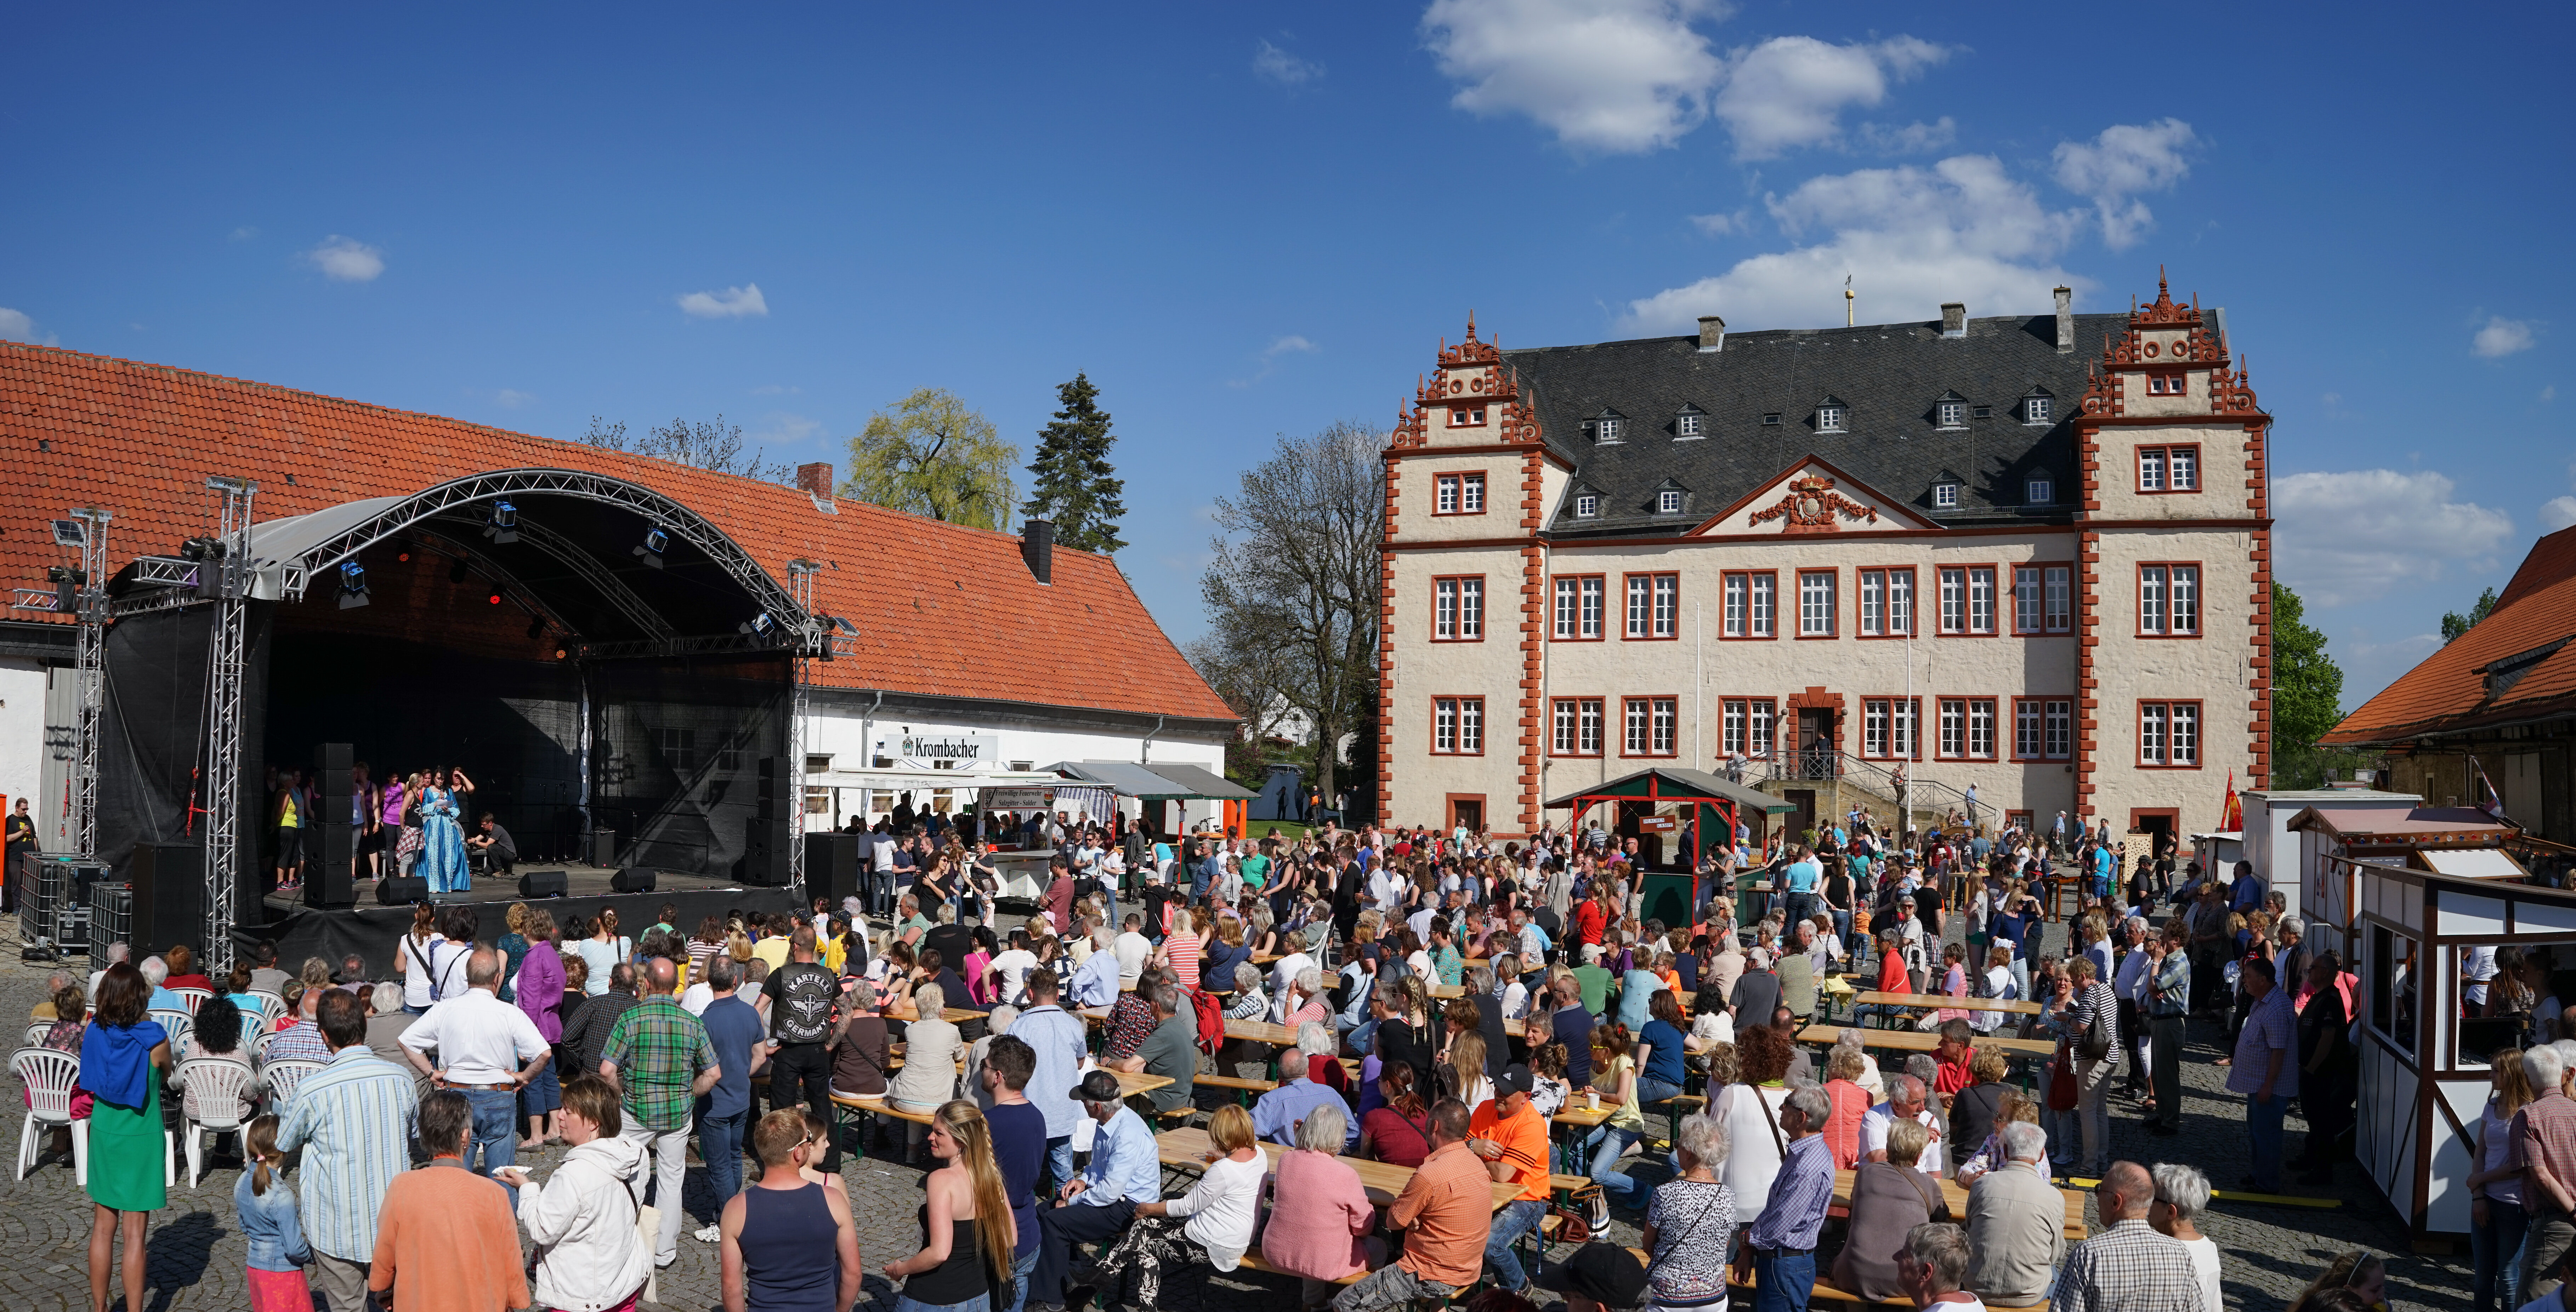 Städtisches Museum Schloss Salder - Museumsfest